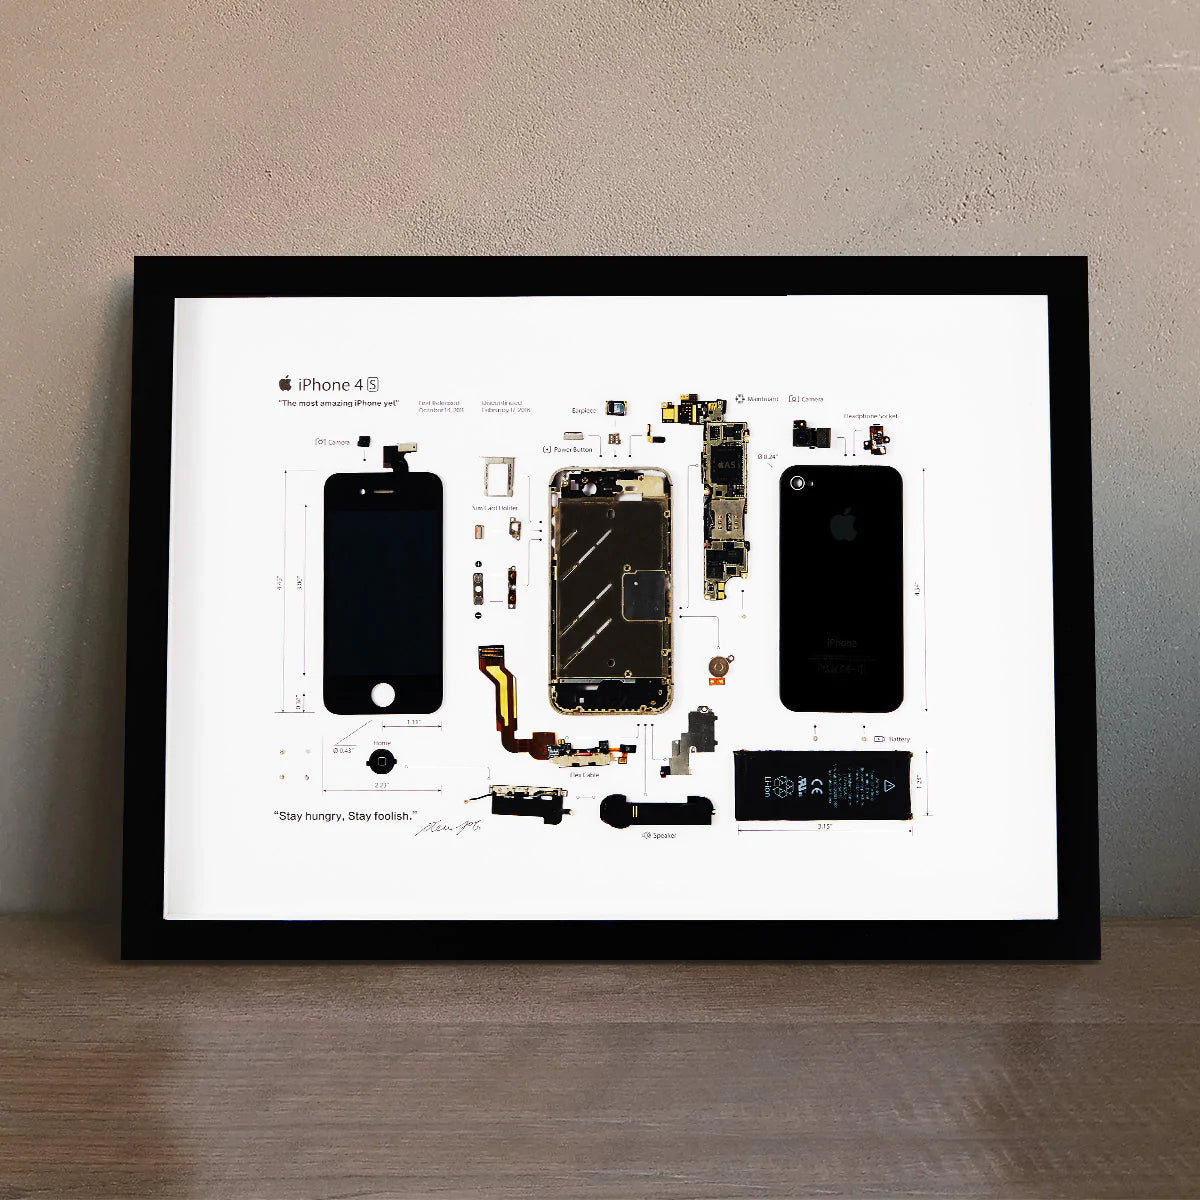 Xreart Deconstructed iPhone 4S Framed Artwork